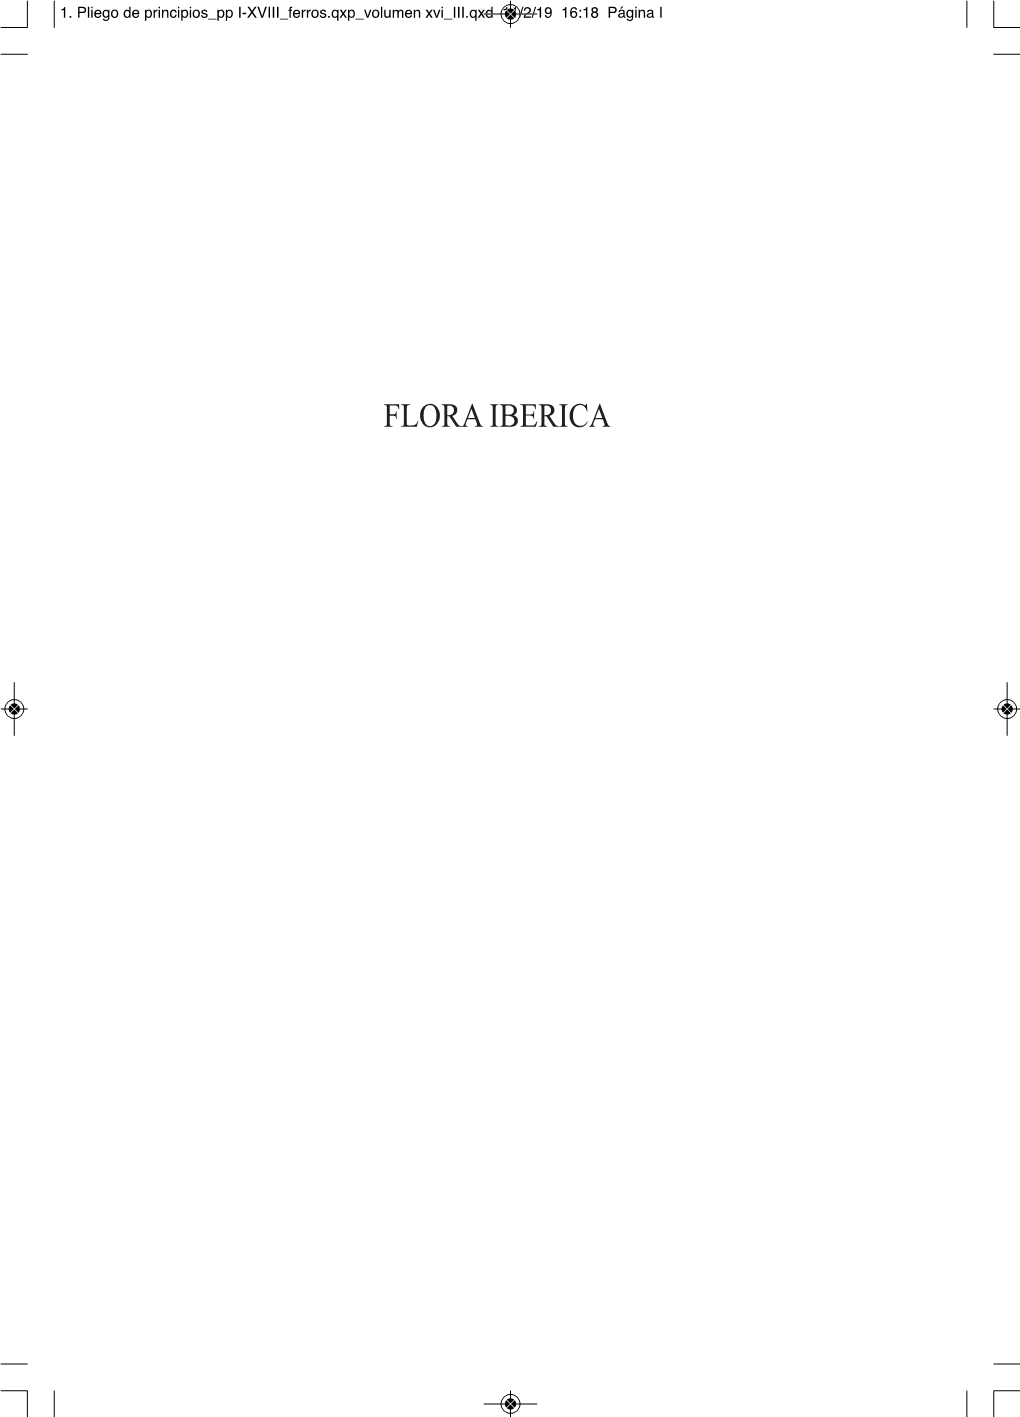 Flora Iberica 1